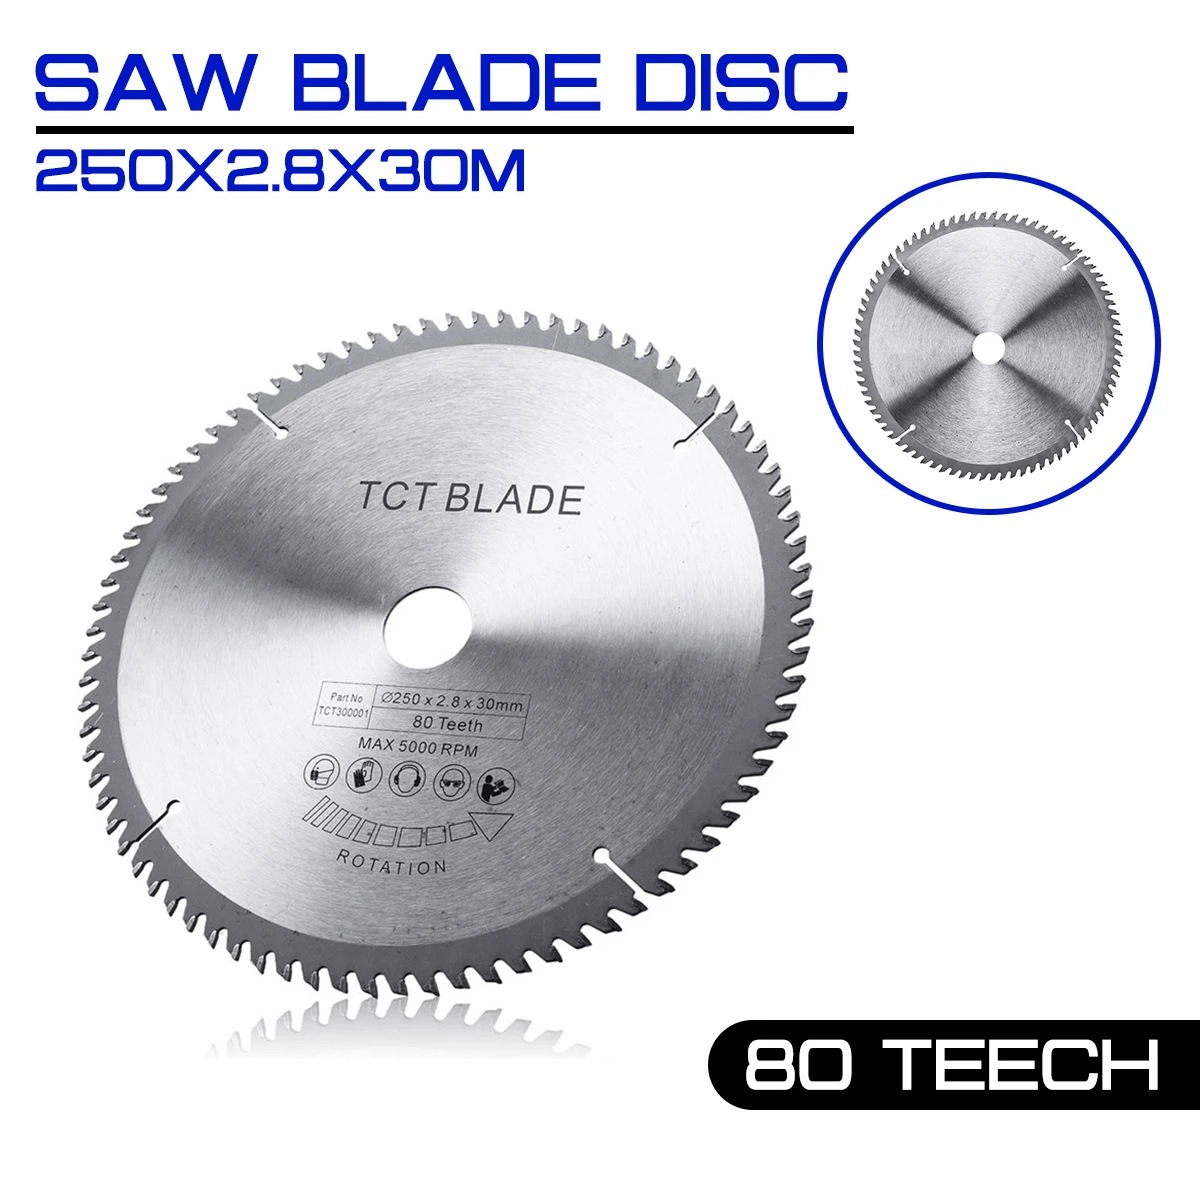 

250x2.8x30mmx80Teech TCT Hard Alloy Saw Blade for Wood Metal Circular Saw Blade Multi-functional for Cutting Metal Tool and Wood